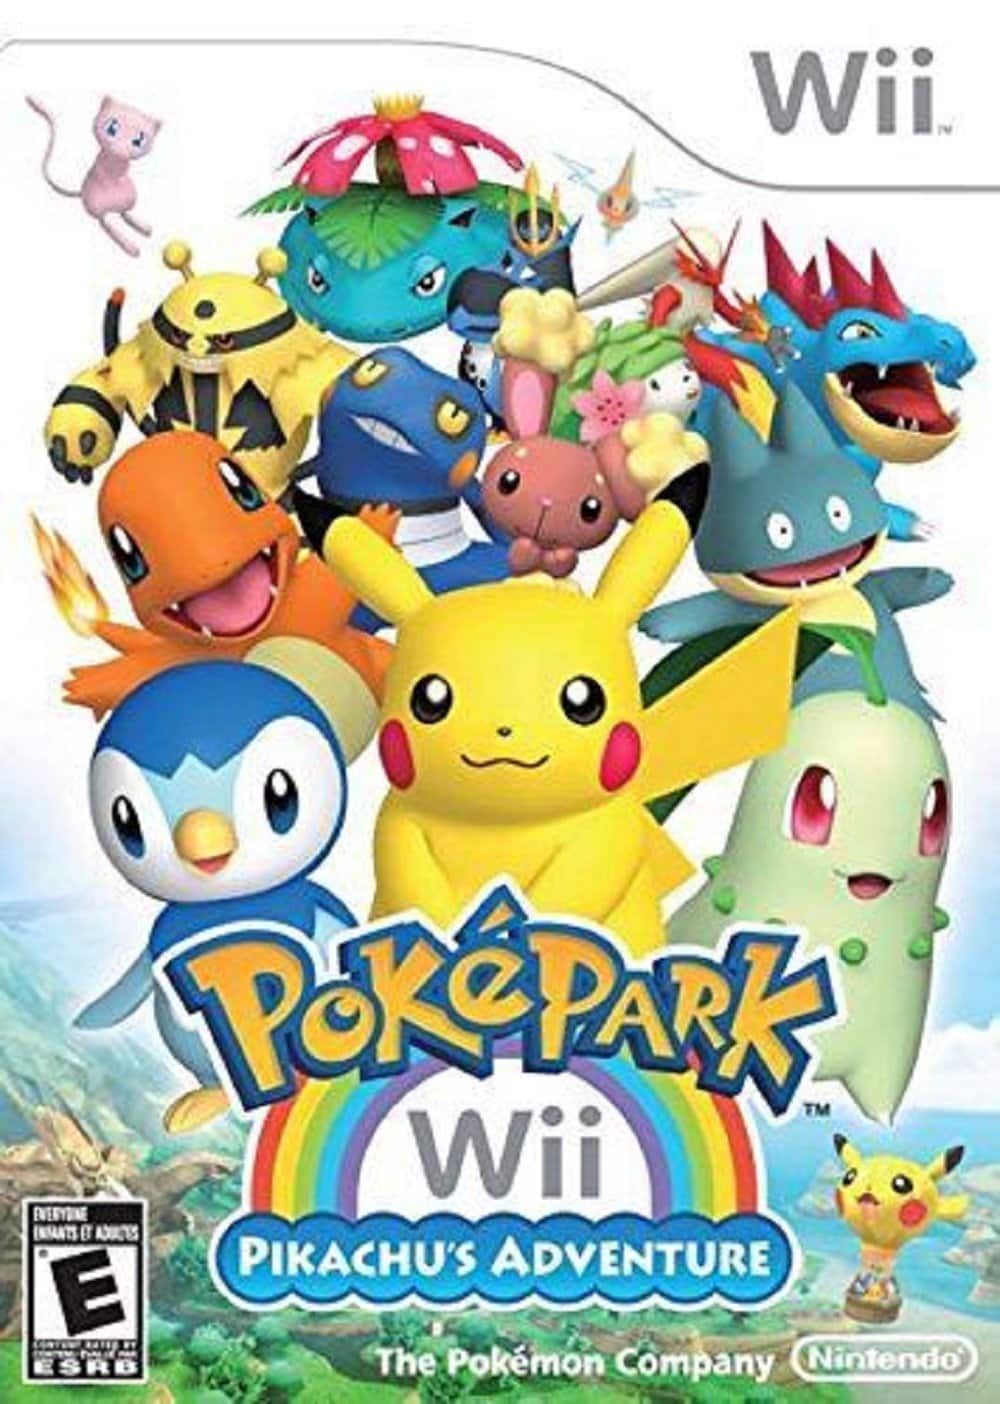 PokéPark Wii: Pikachu’s Adventure player count stats